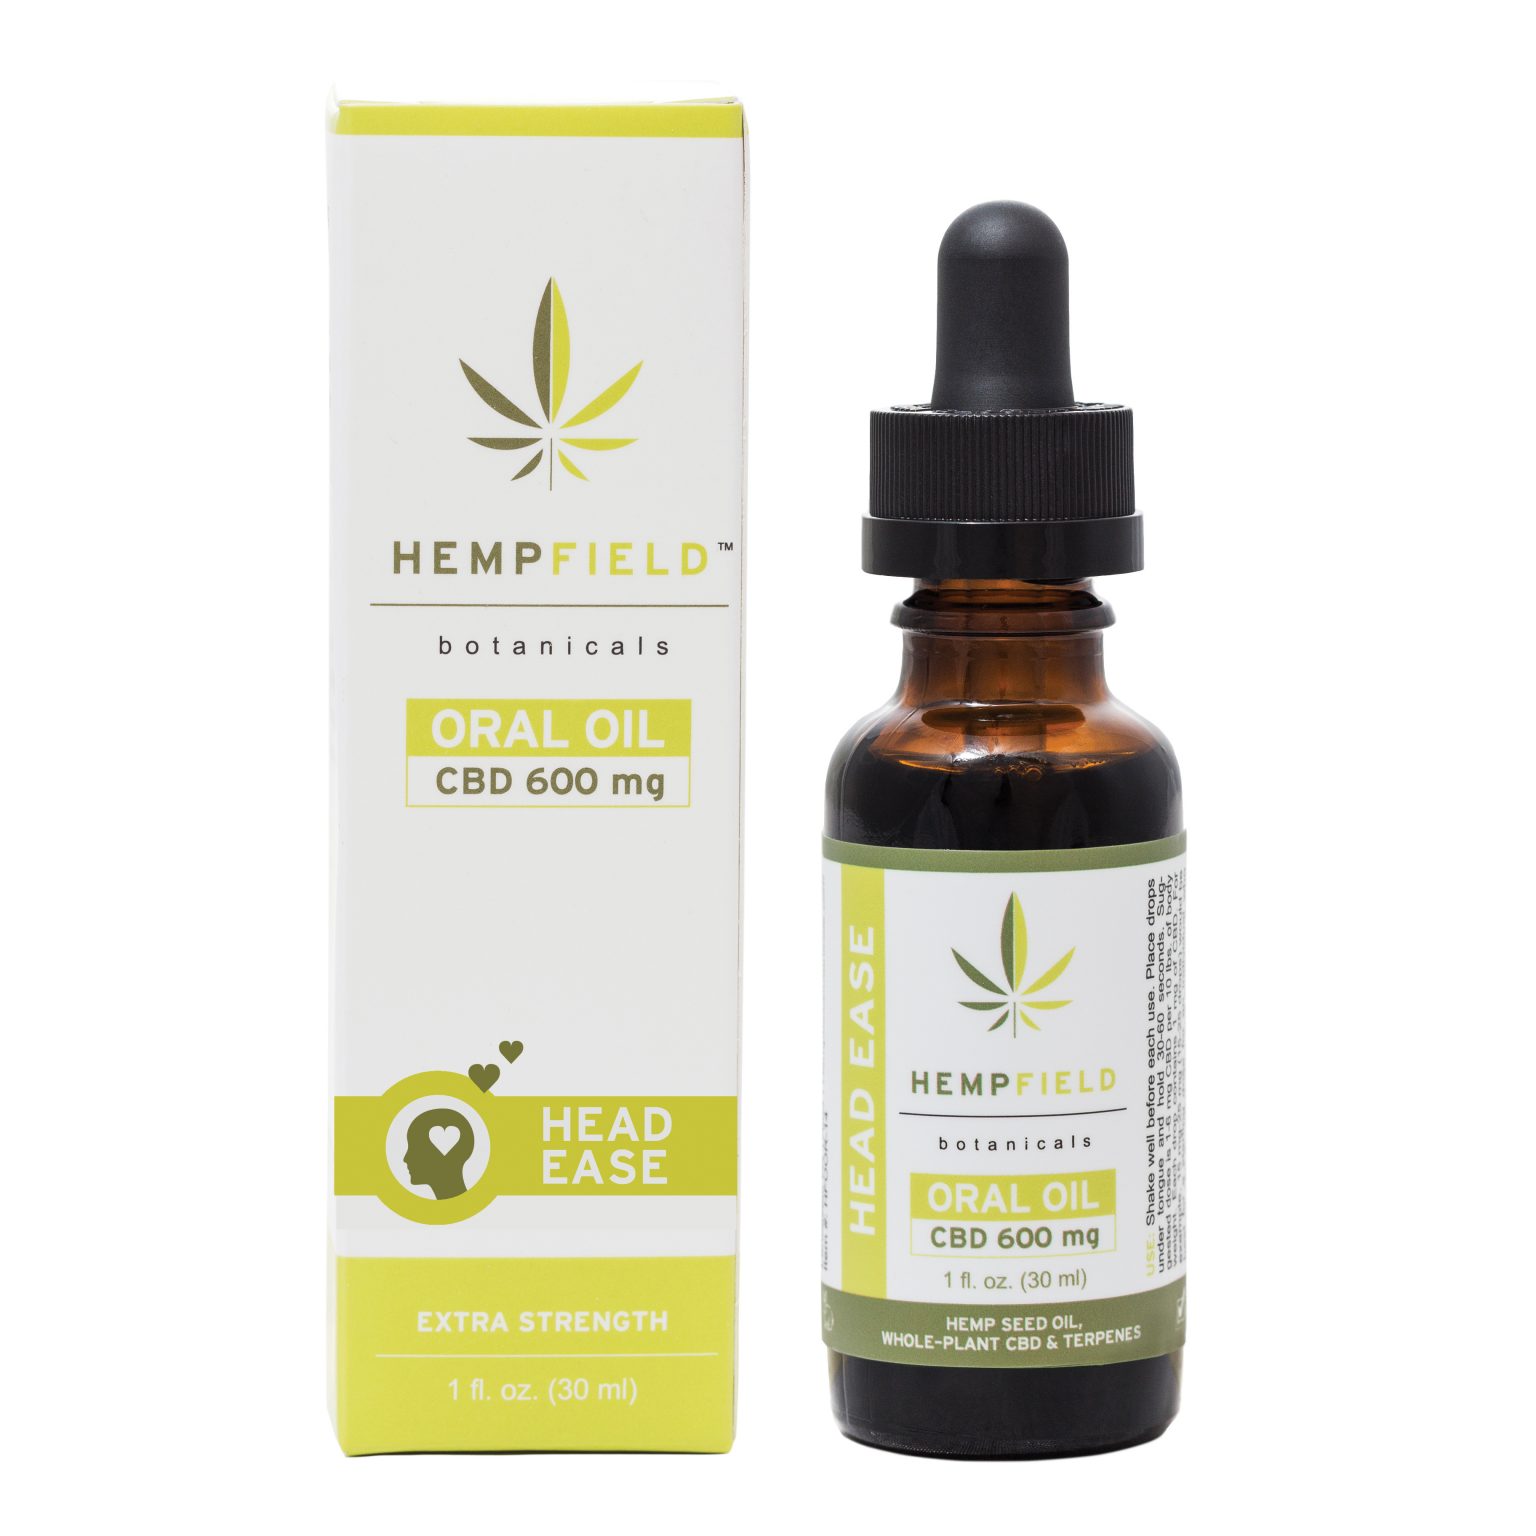 Head Ease CBD Oral Oil | Hempfield Botanicals